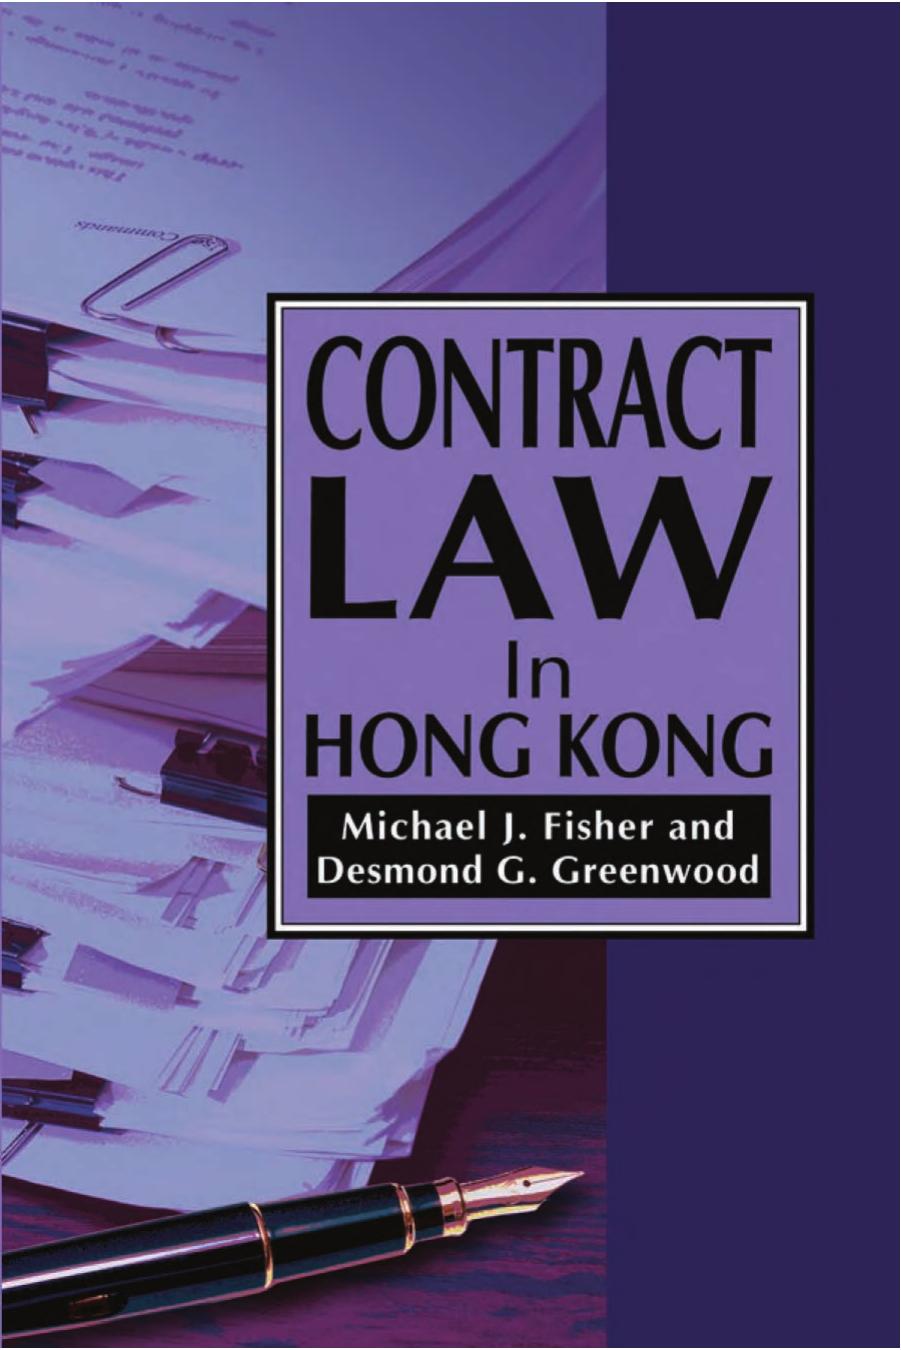 Contract Law in Hong Kong.jpg